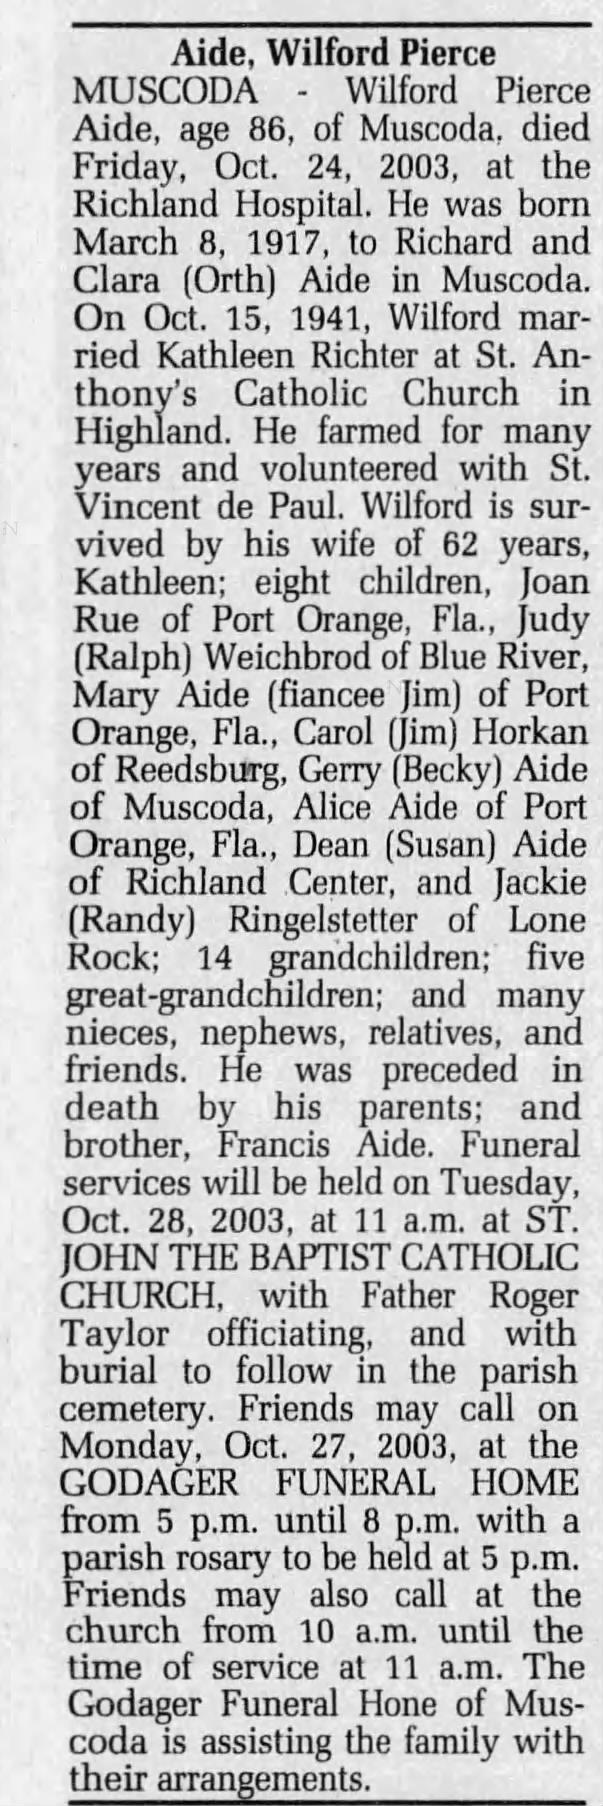 Obituary for Aide Pierce, 1917-2003 (Aged 86)